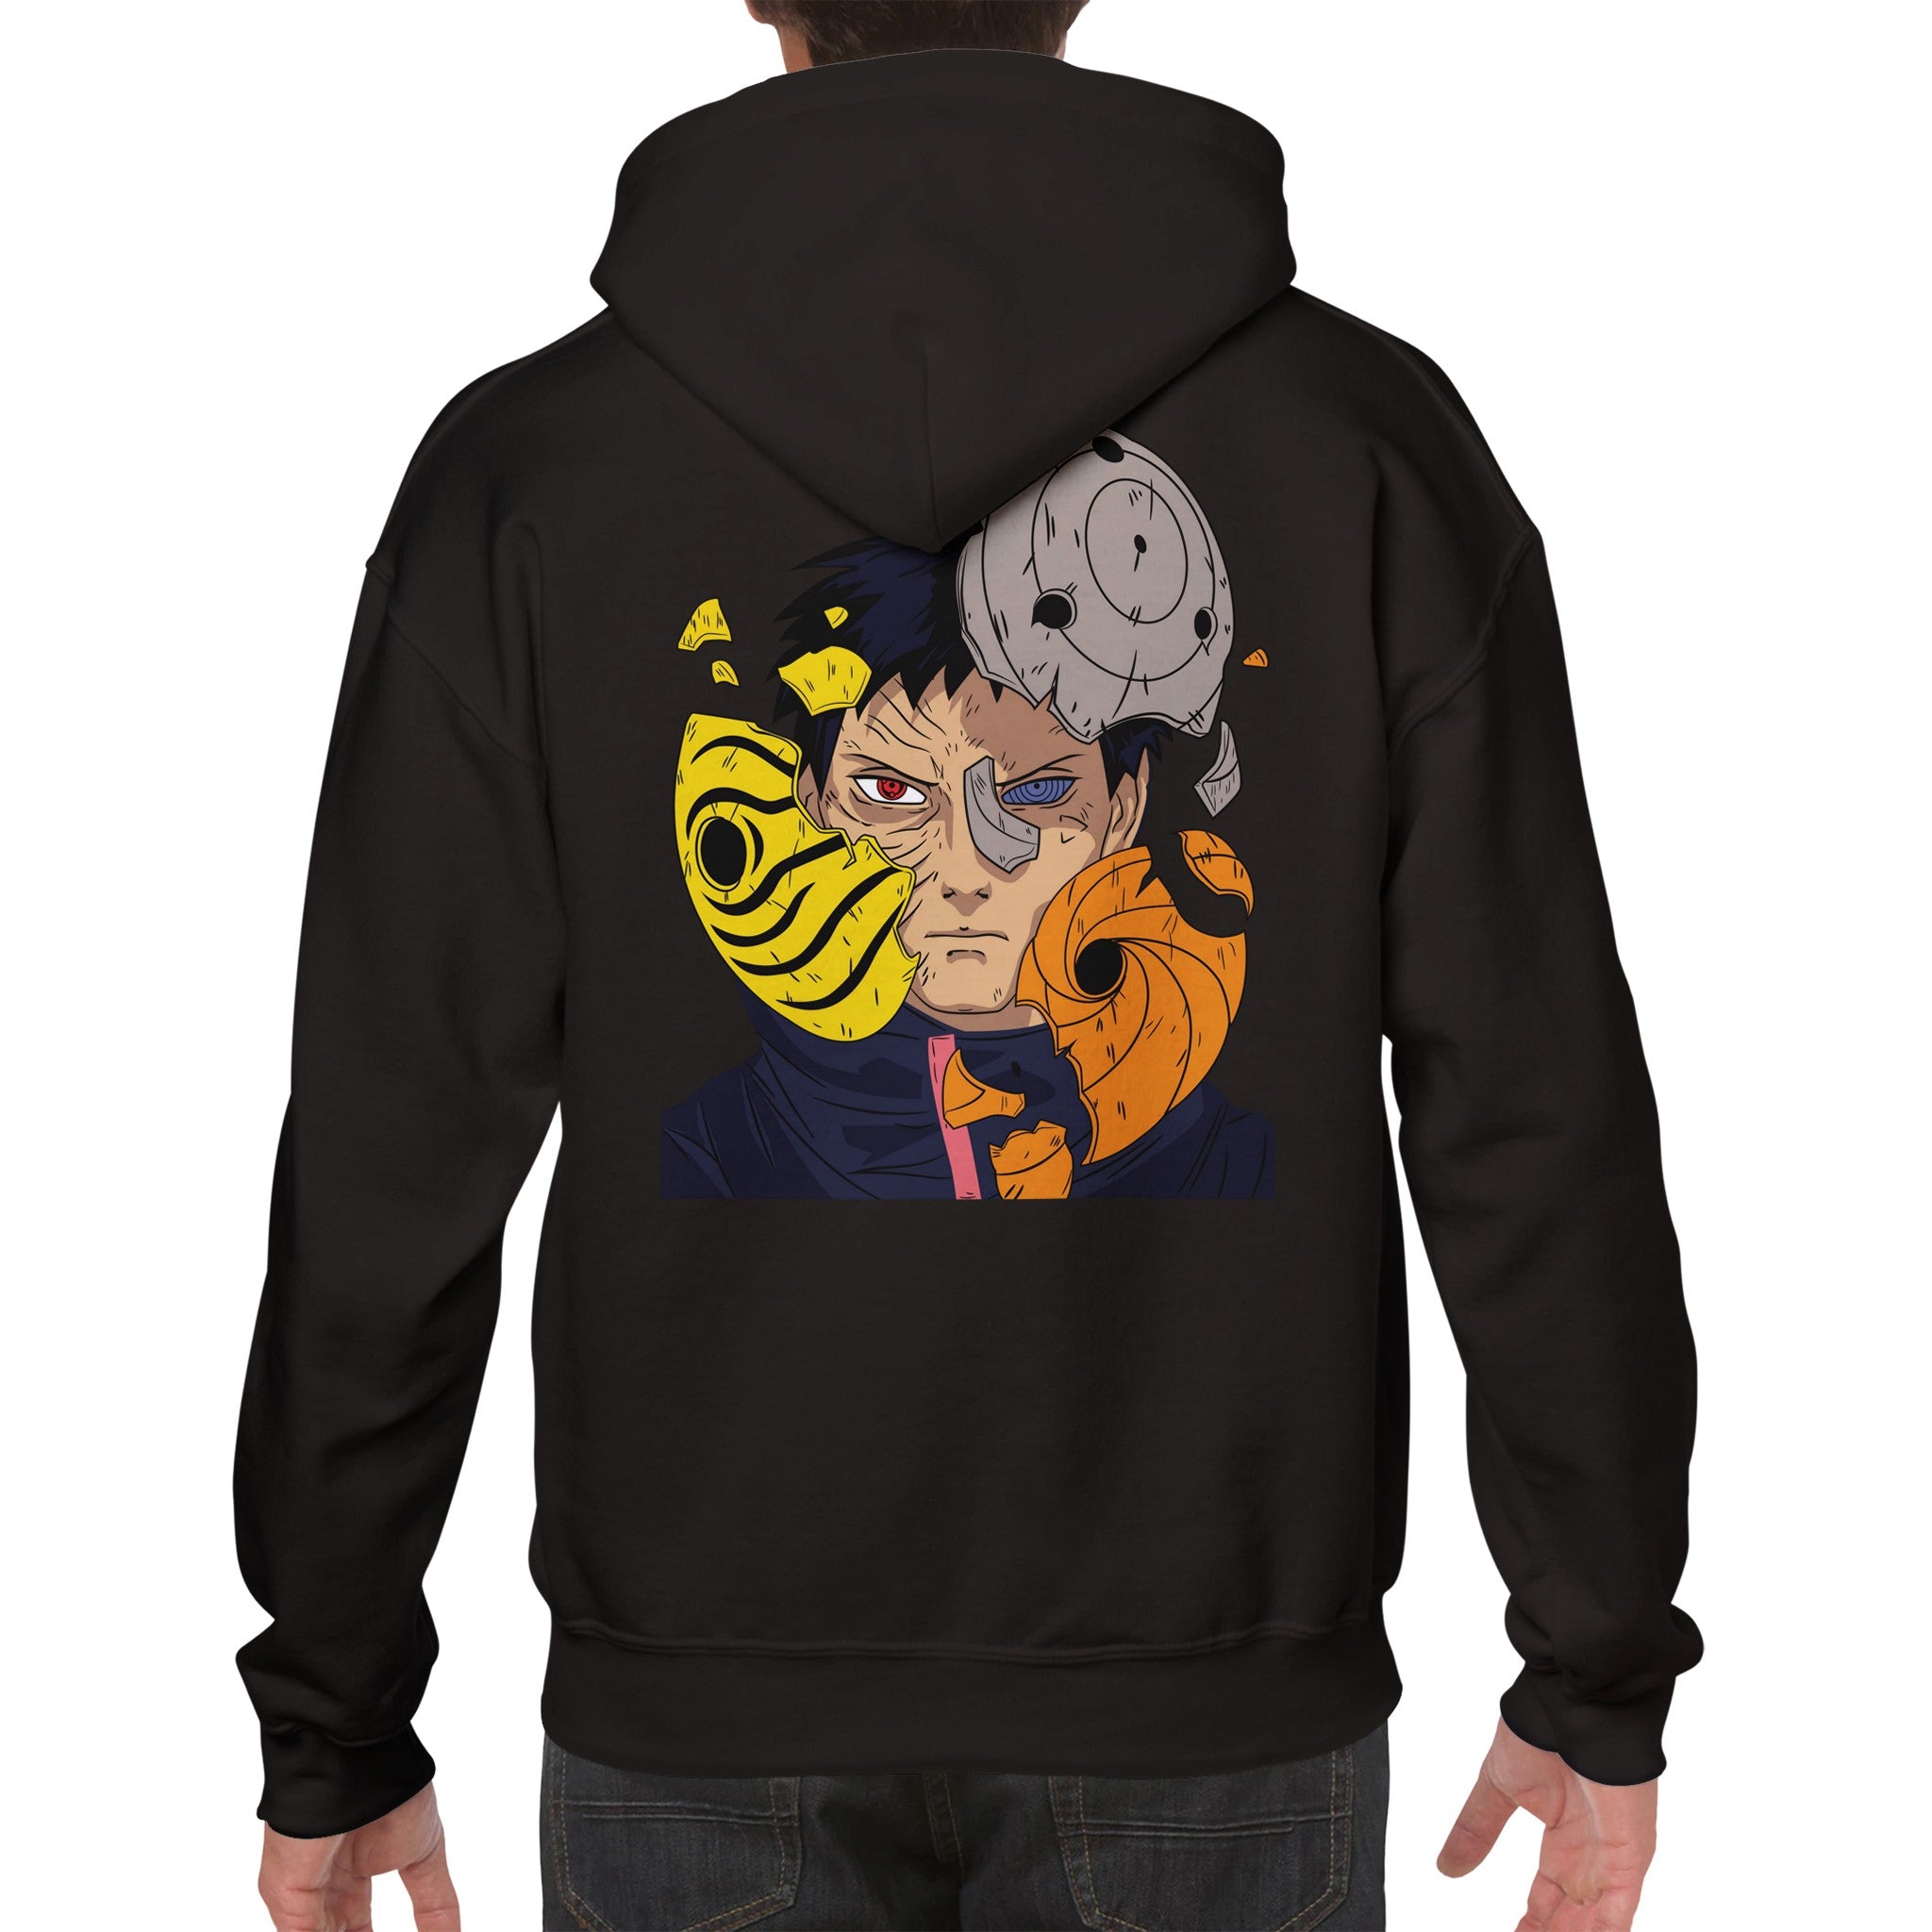 shop and buy obito uchiha anime hoodie